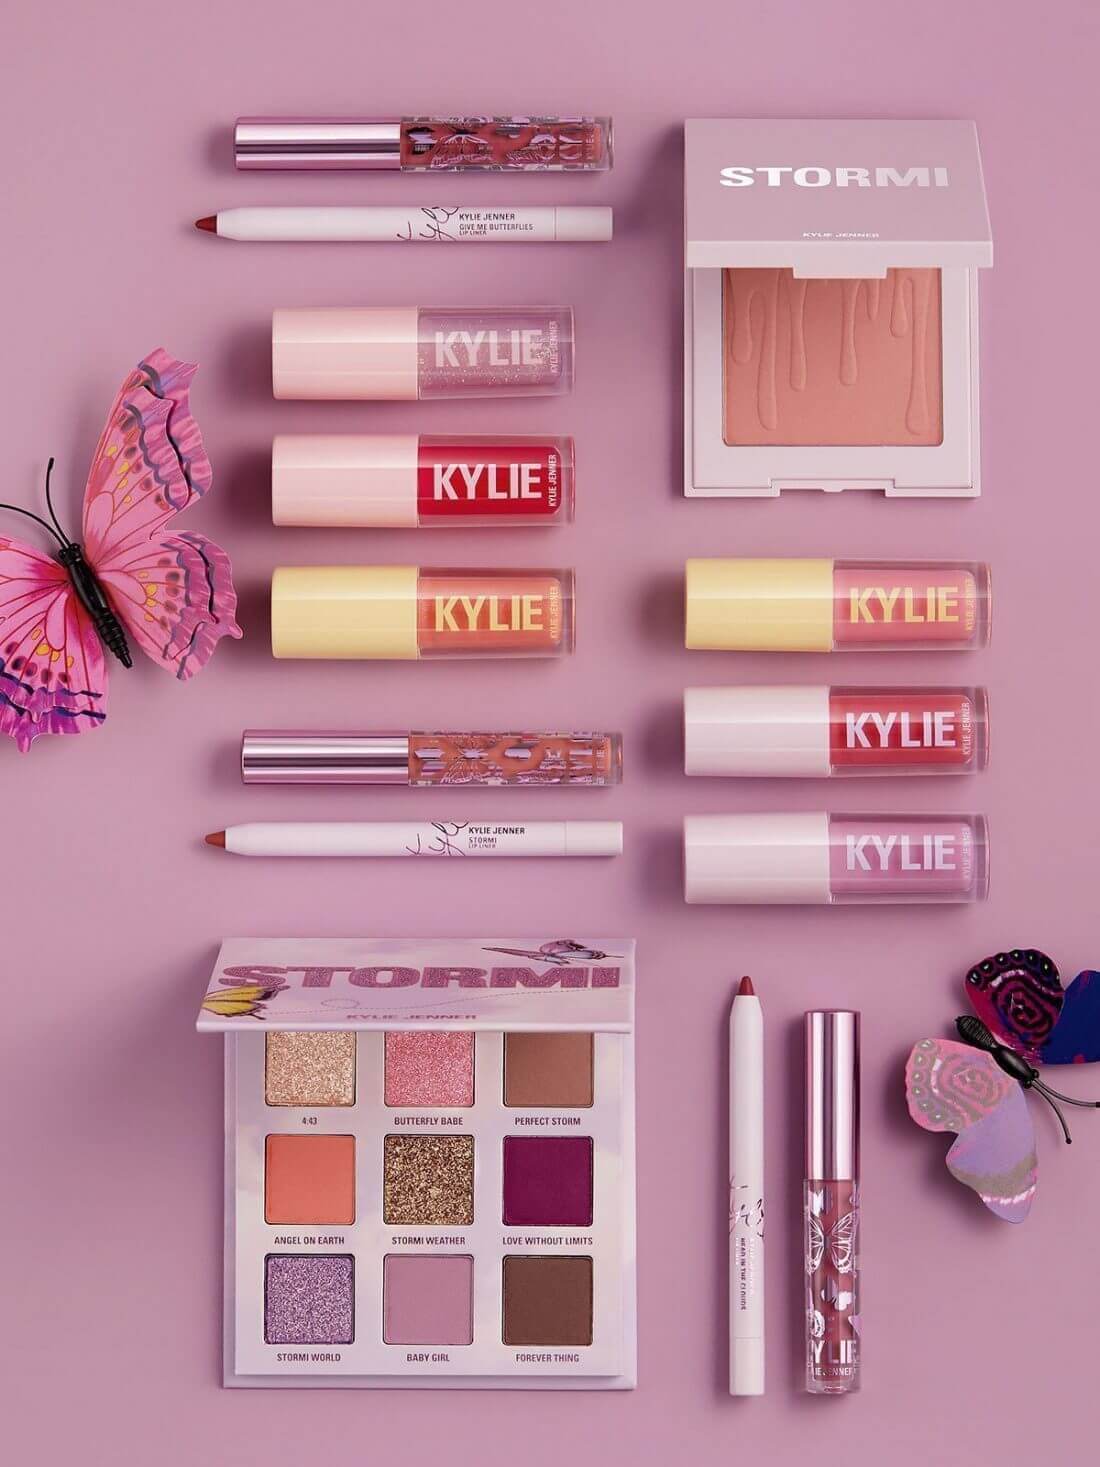 Kylie Cosmetics Stormi Collection,High Gloss Bundle